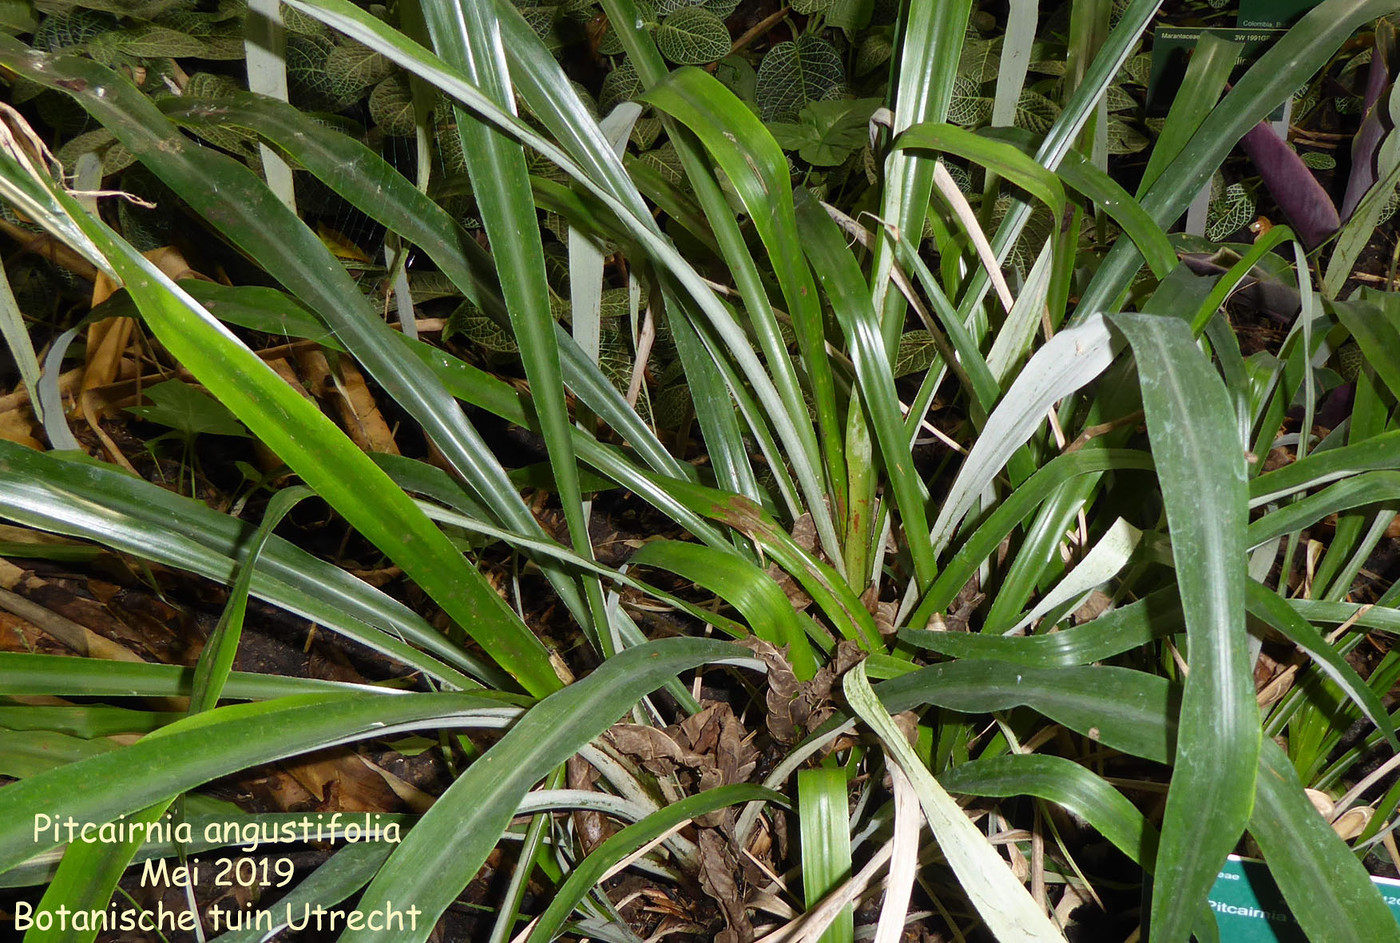 Pitcairnia angustifolia